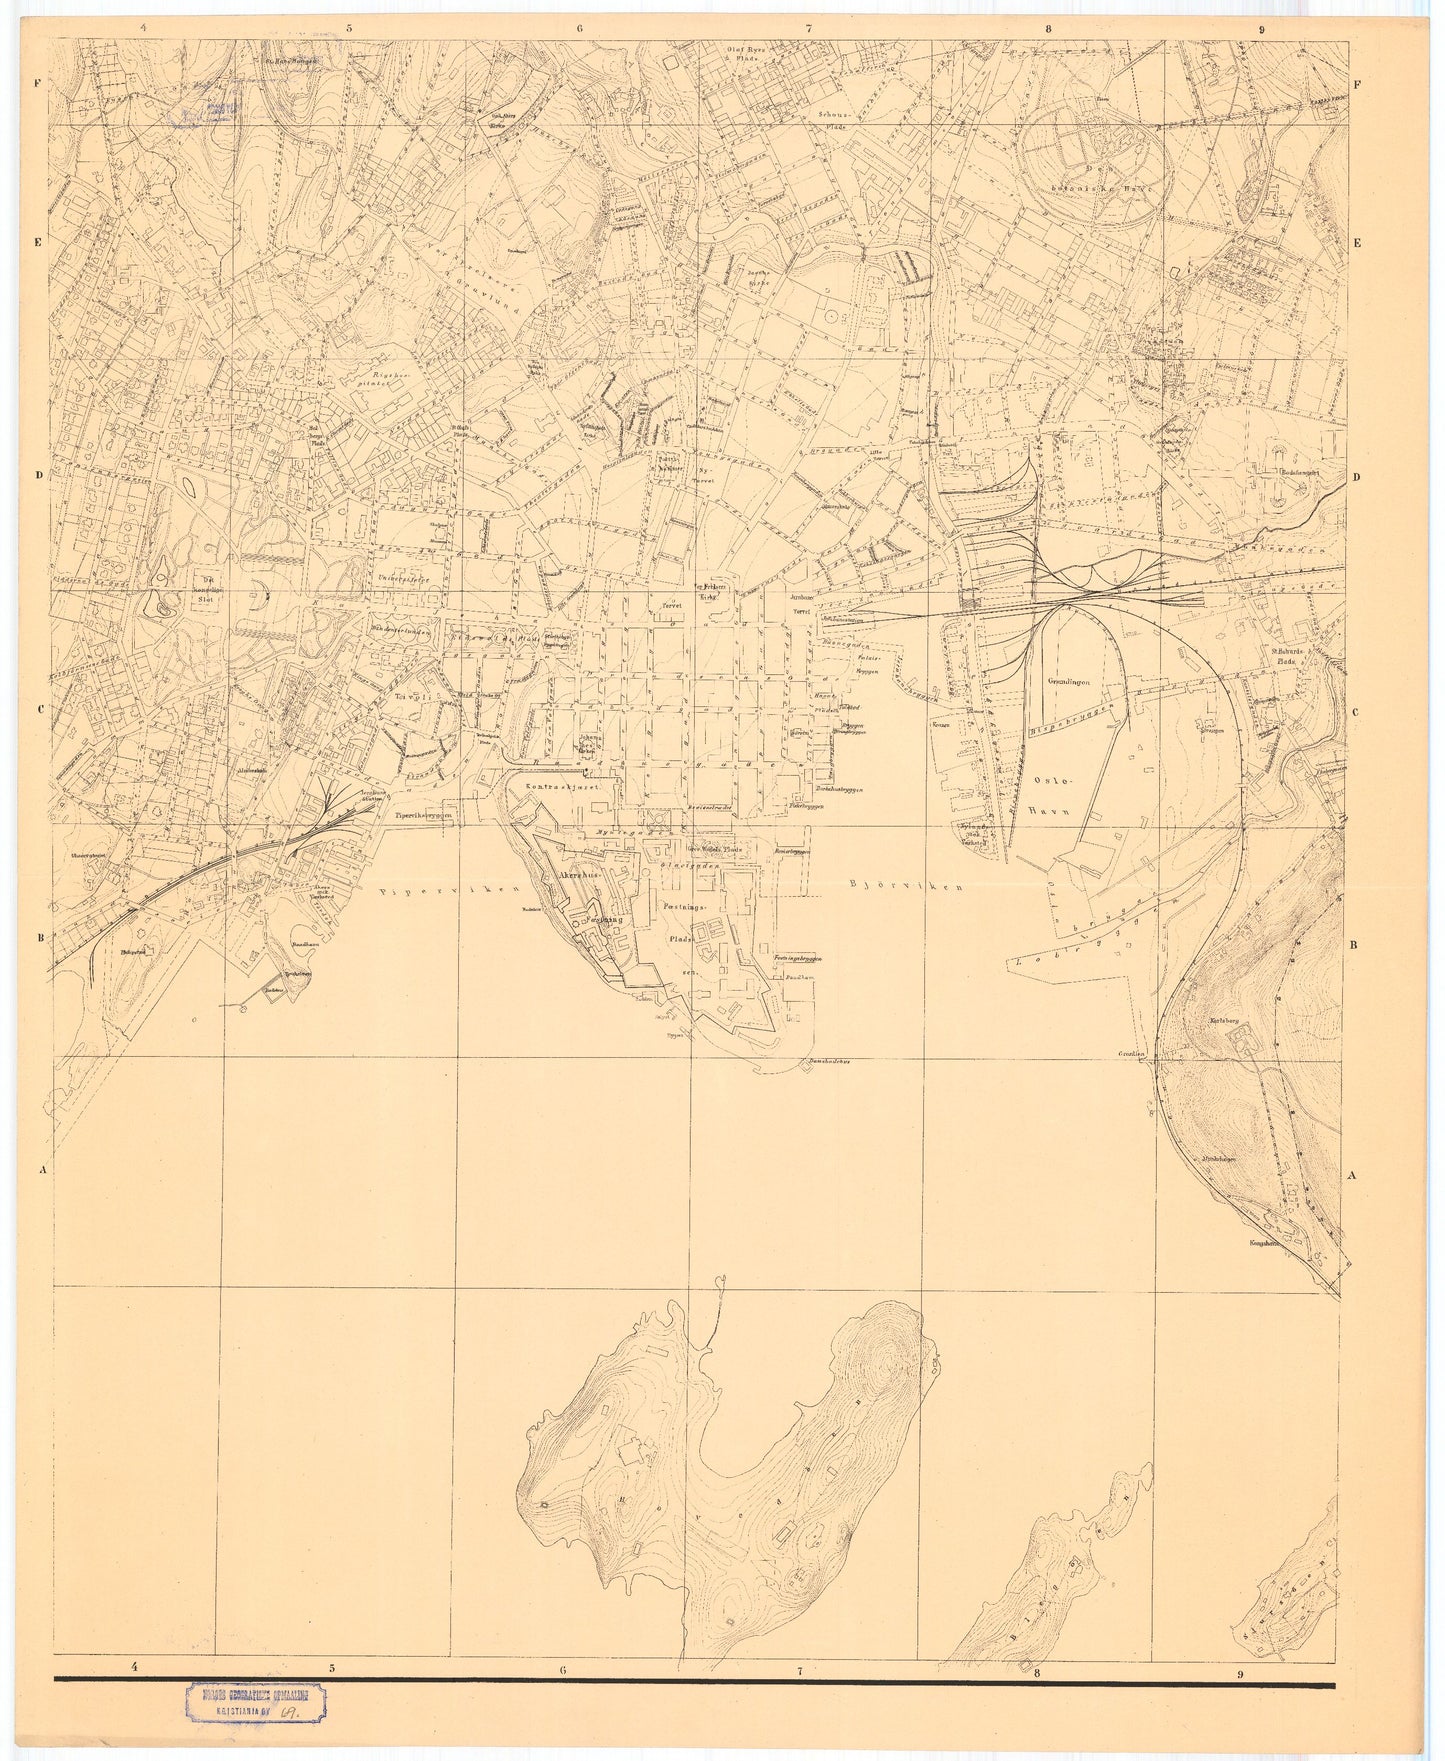 Kristiania amt nr 69: Kart over Kristiania med det Kristiania Bygningslov underlagte Bælte af Aker: Oslo